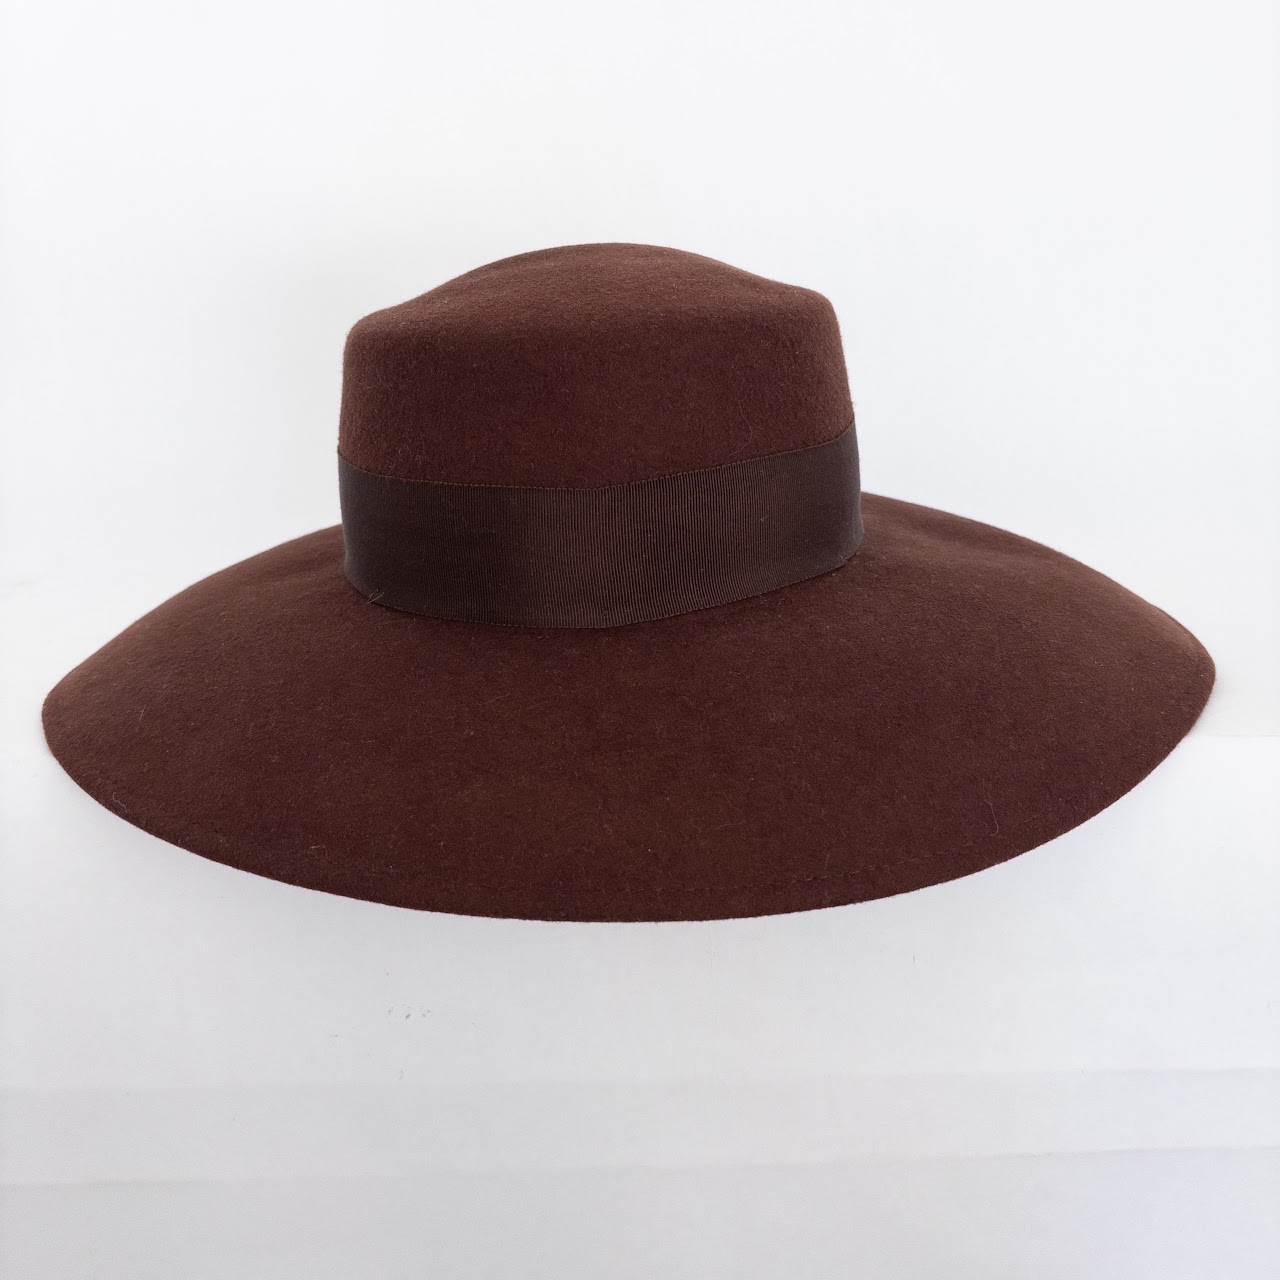 Burberry's Wide Brimmed Felt Hat